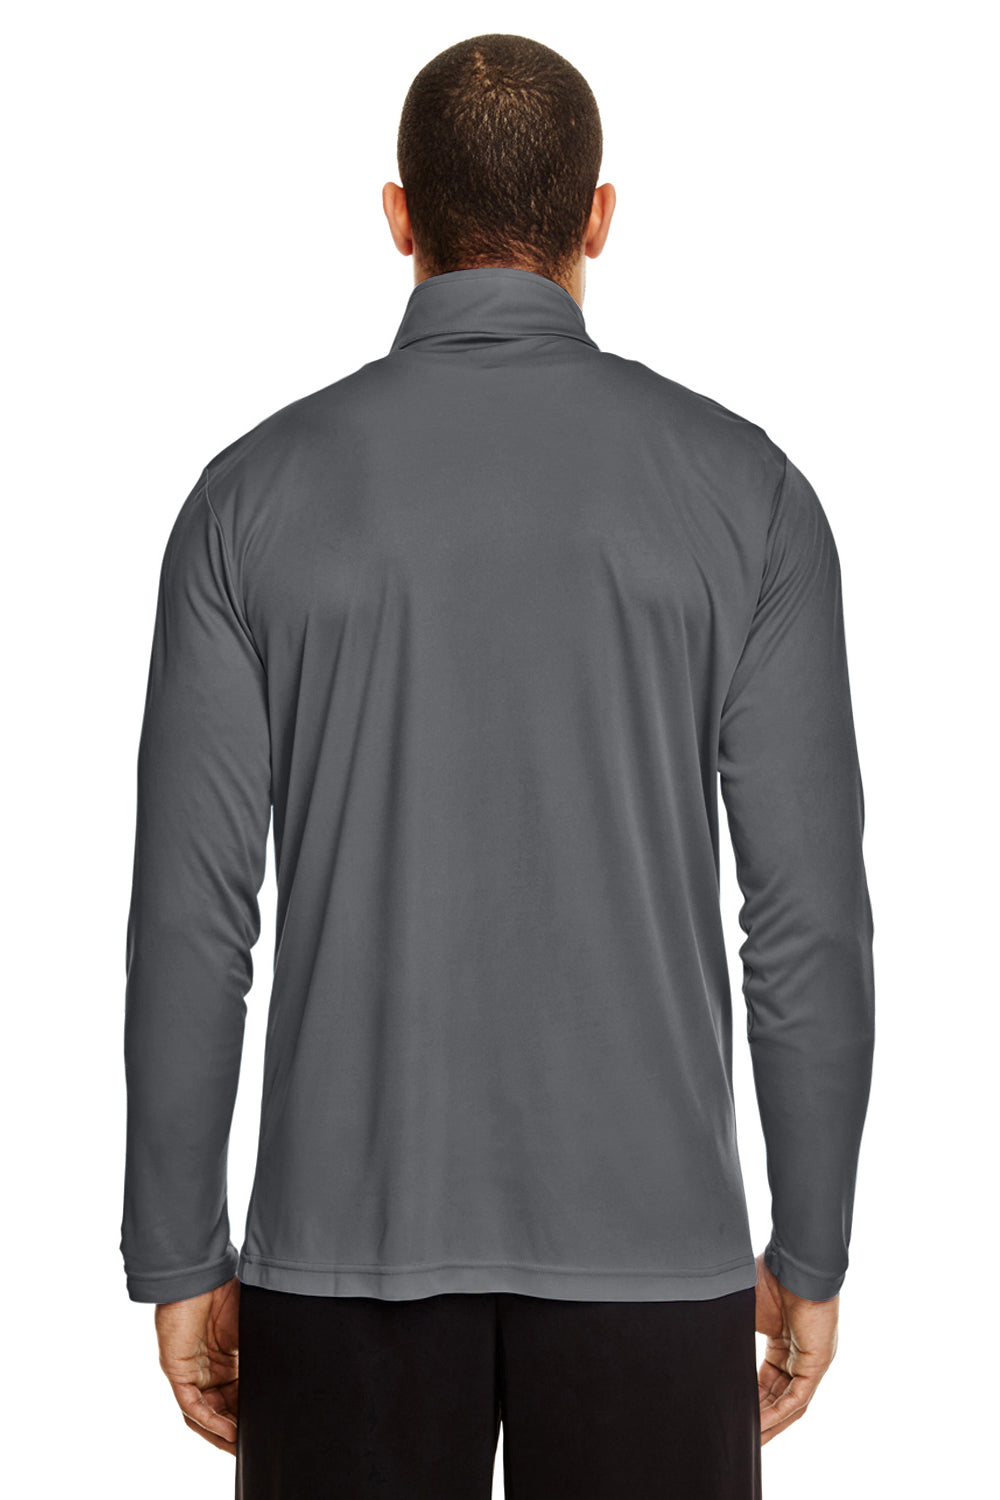 Team 365 TT31 Mens Zone Performance Moisture Wicking 1/4 Zip Sweatshirt Graphite Grey Back